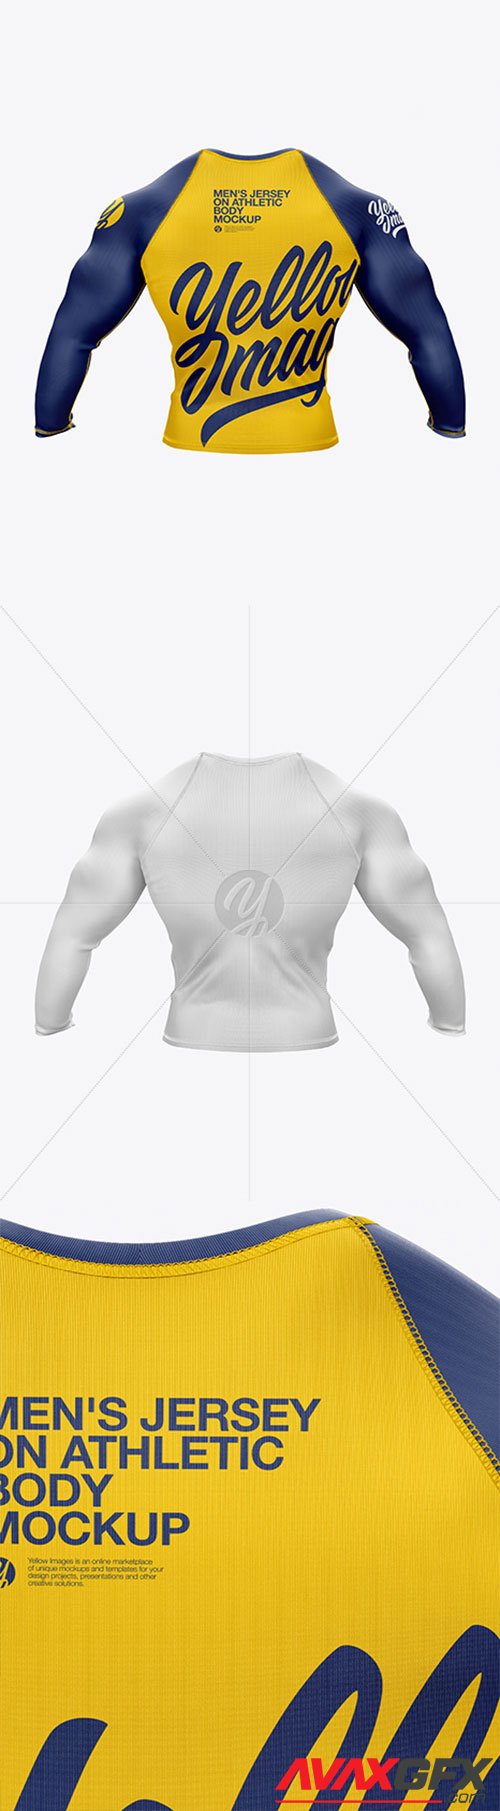 Men's Long Sleeve Jersey on Athletic Body 41617